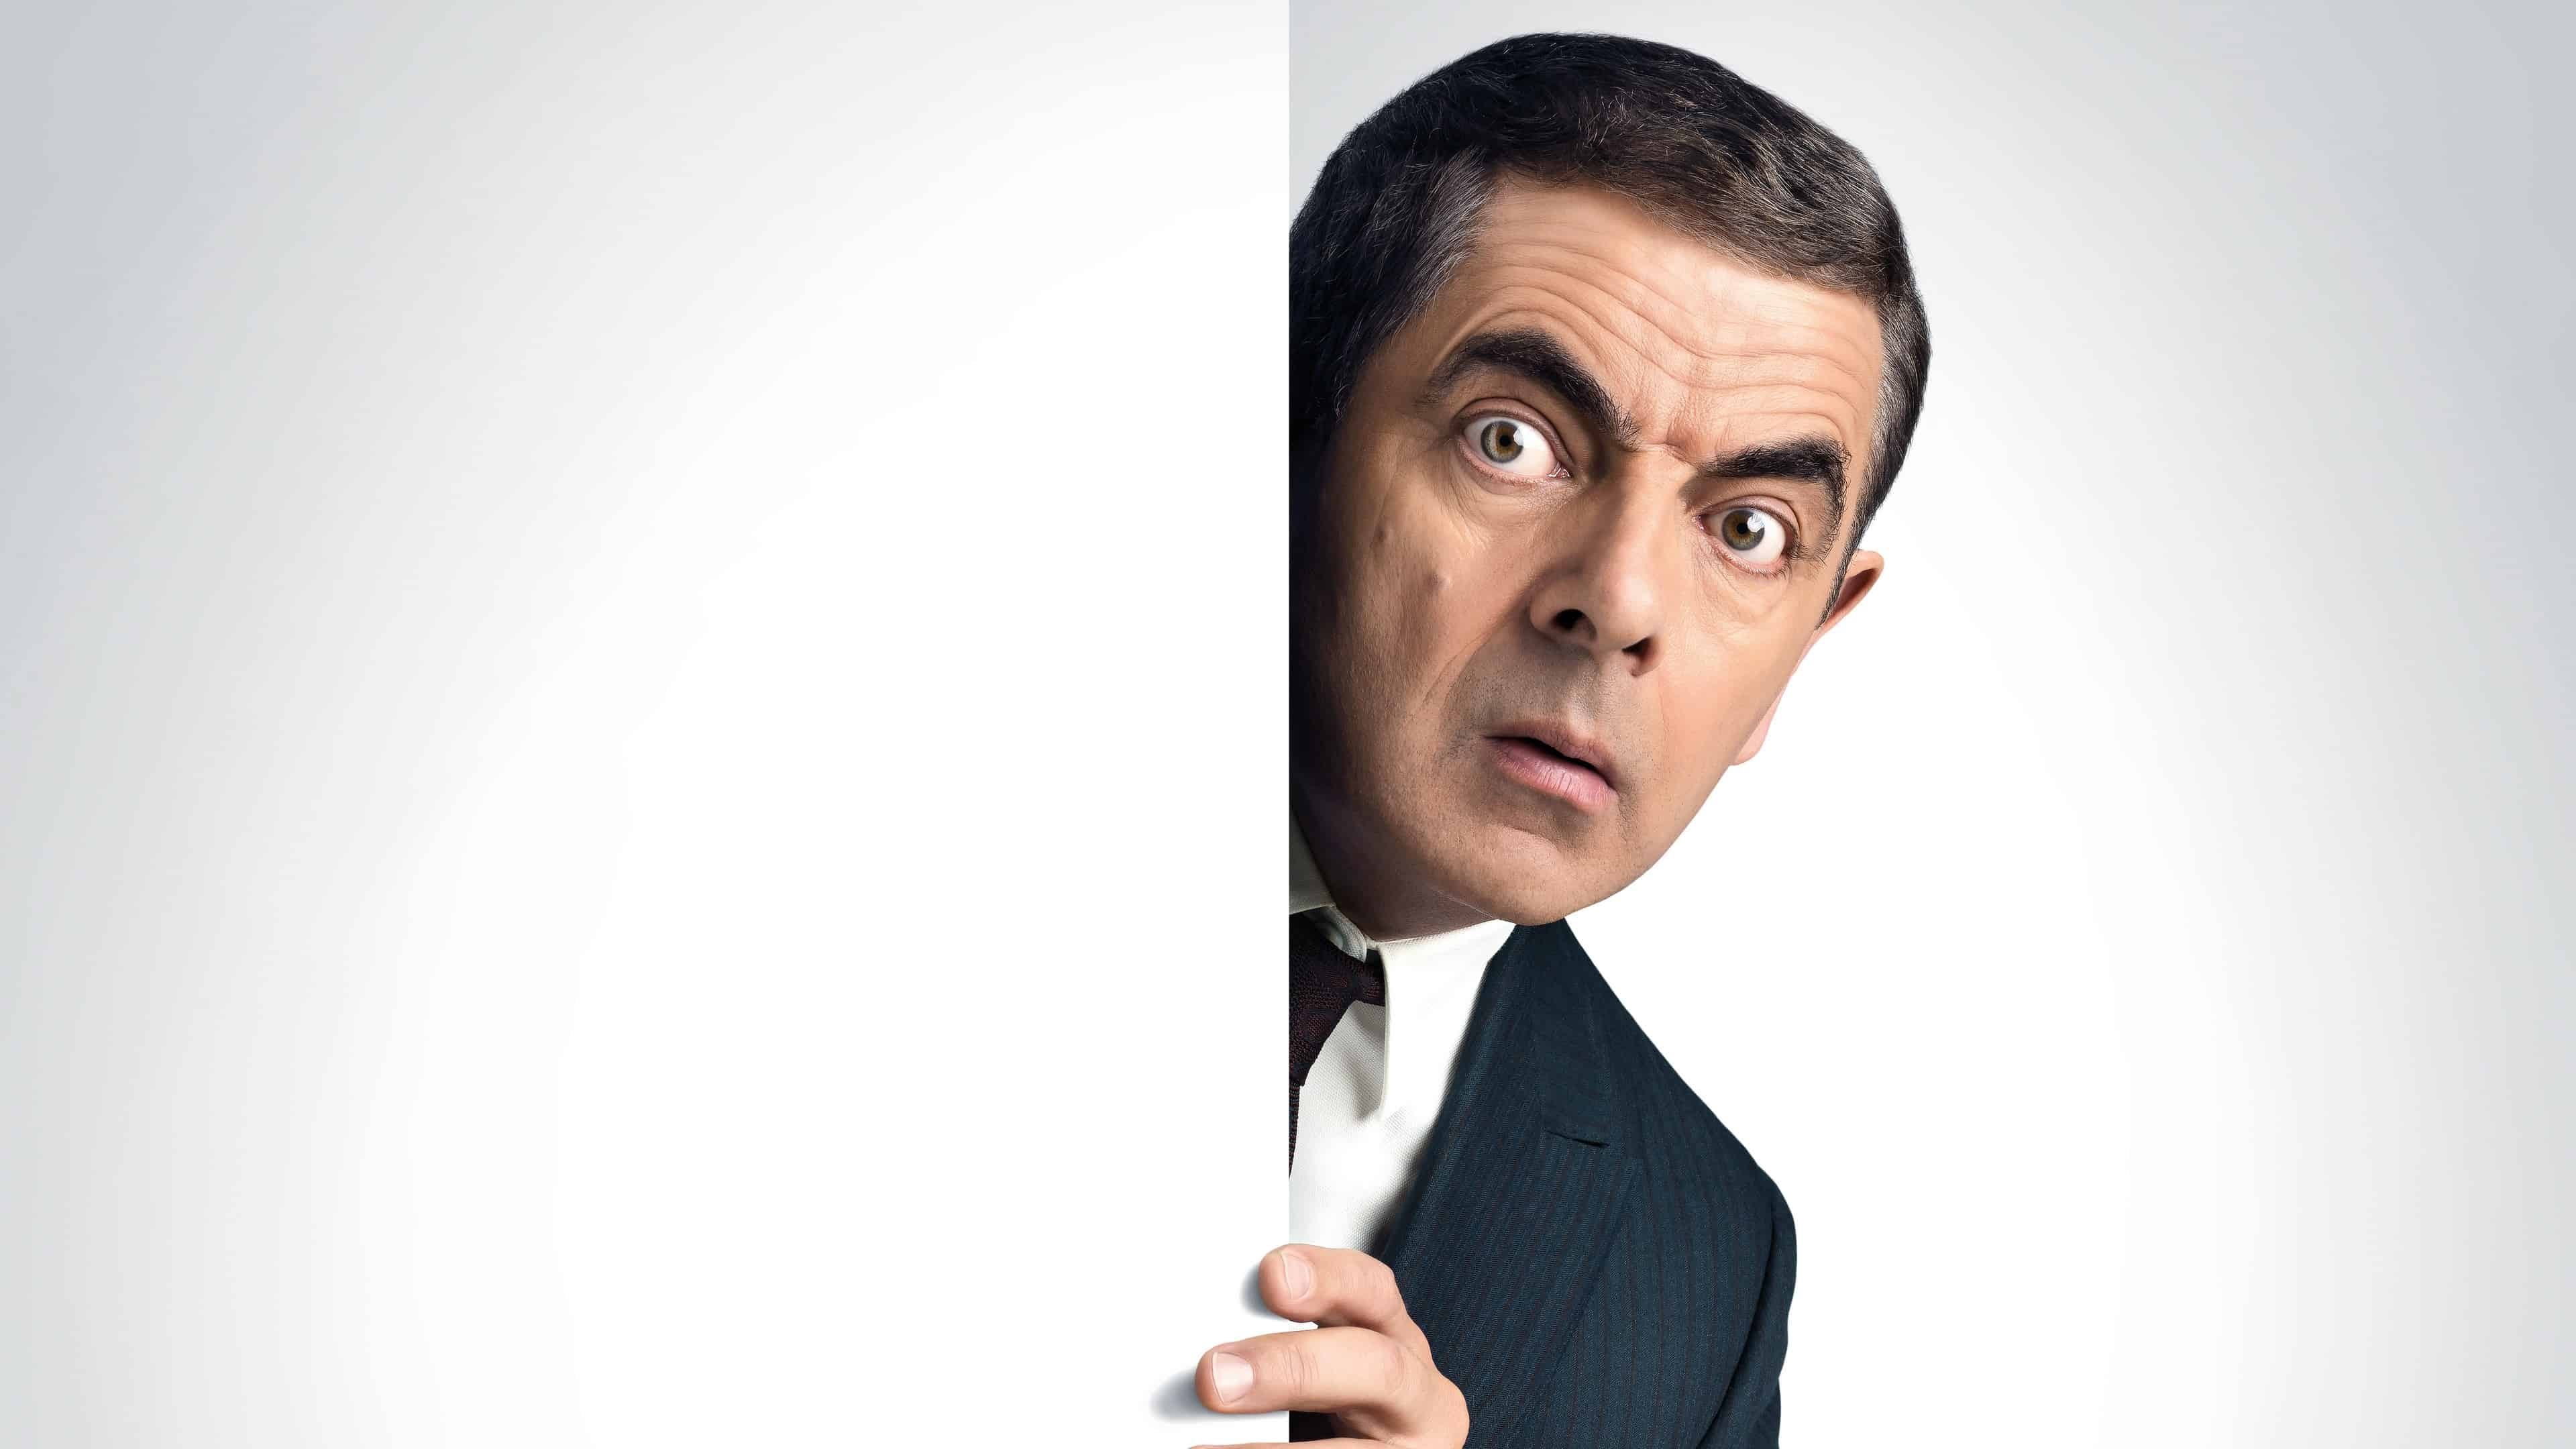 Rowan Atkinson: Johnny English, A series of films parodying the James Bond secret agent genre. 3840x2160 4K Background.